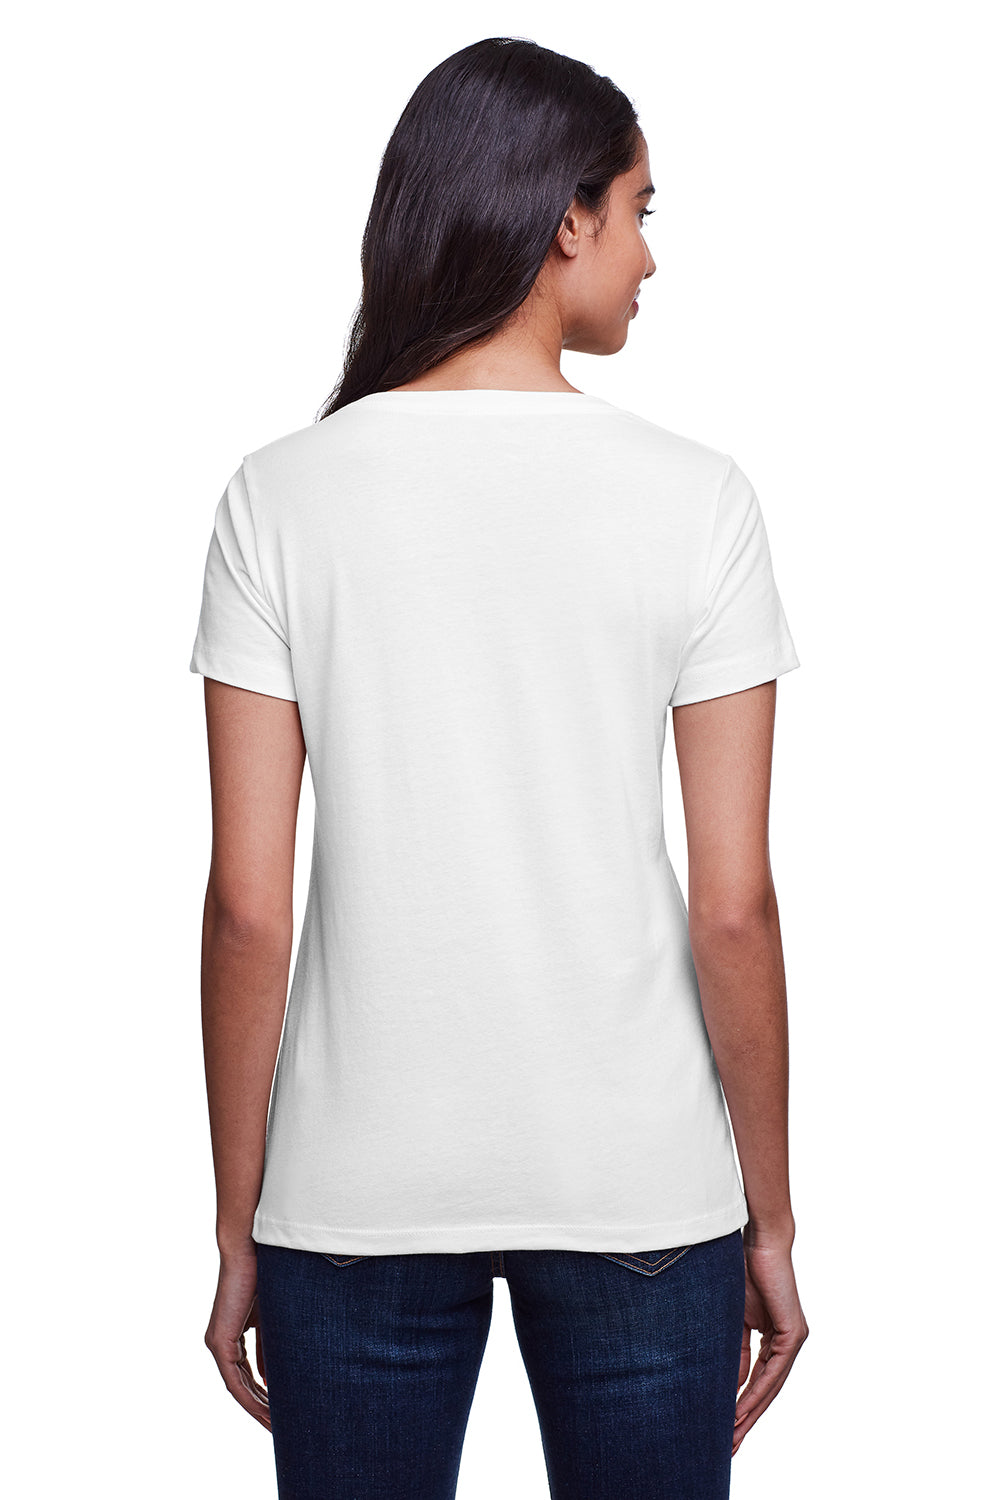 Next Level N4240 Womens Eco Performance Moisture Wicking Short Sleeve V-Neck T-Shirt White Back